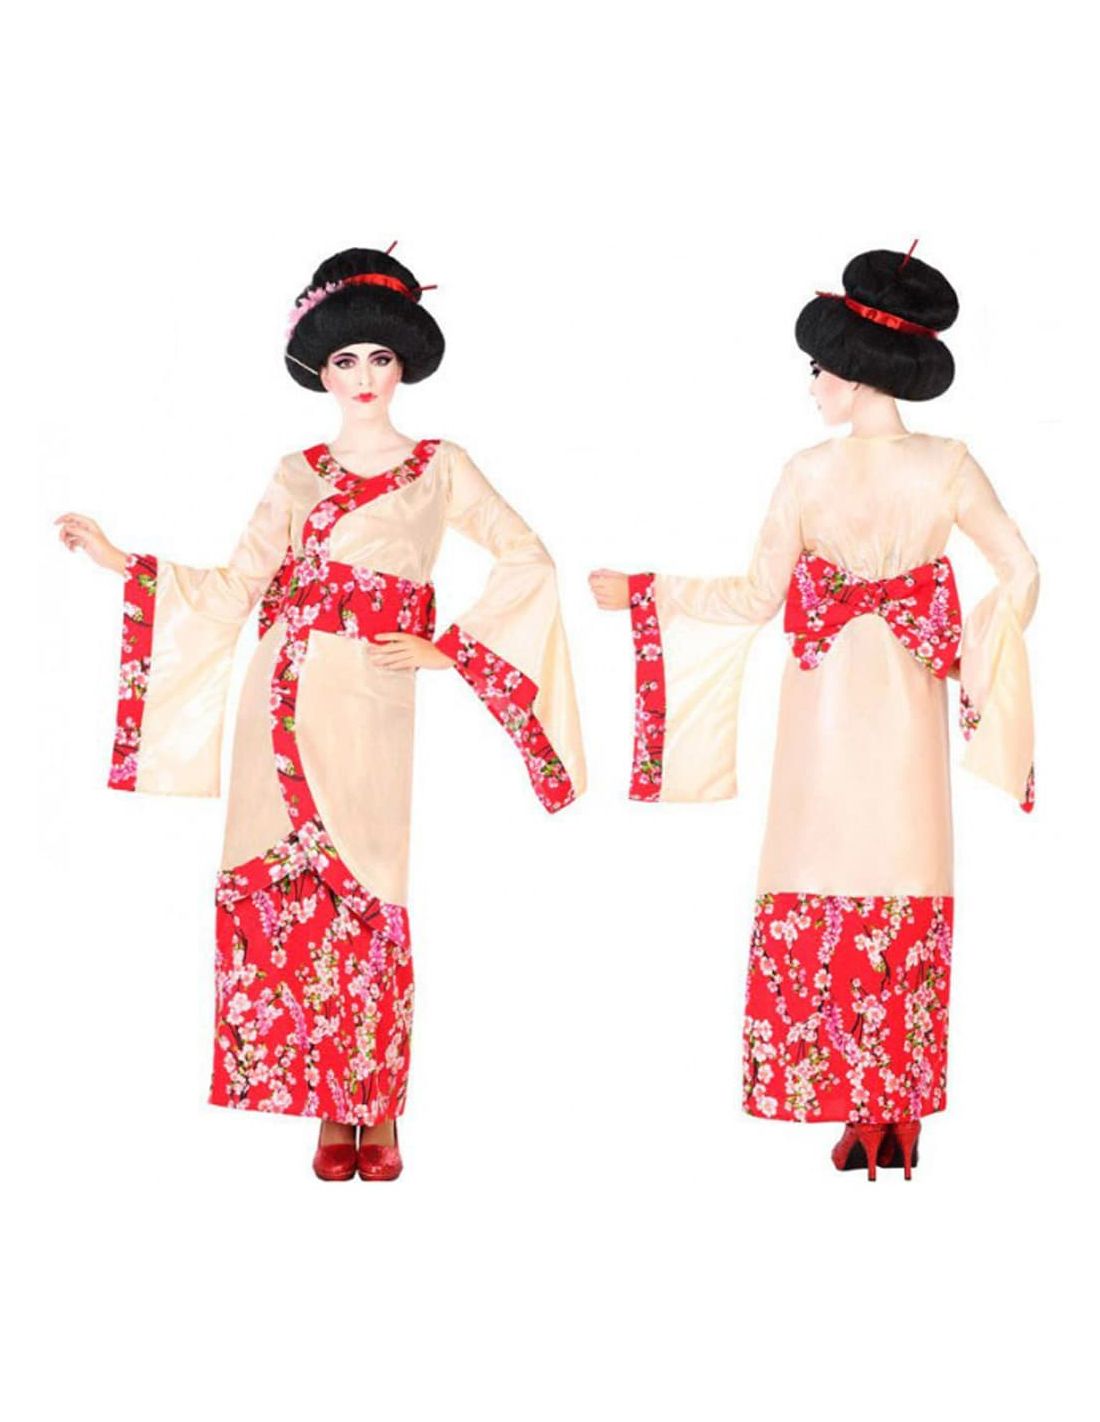 https://www.mercadisfraces.es/23426-thickbox_default/disfraz-de-geisha-mujer.jpg